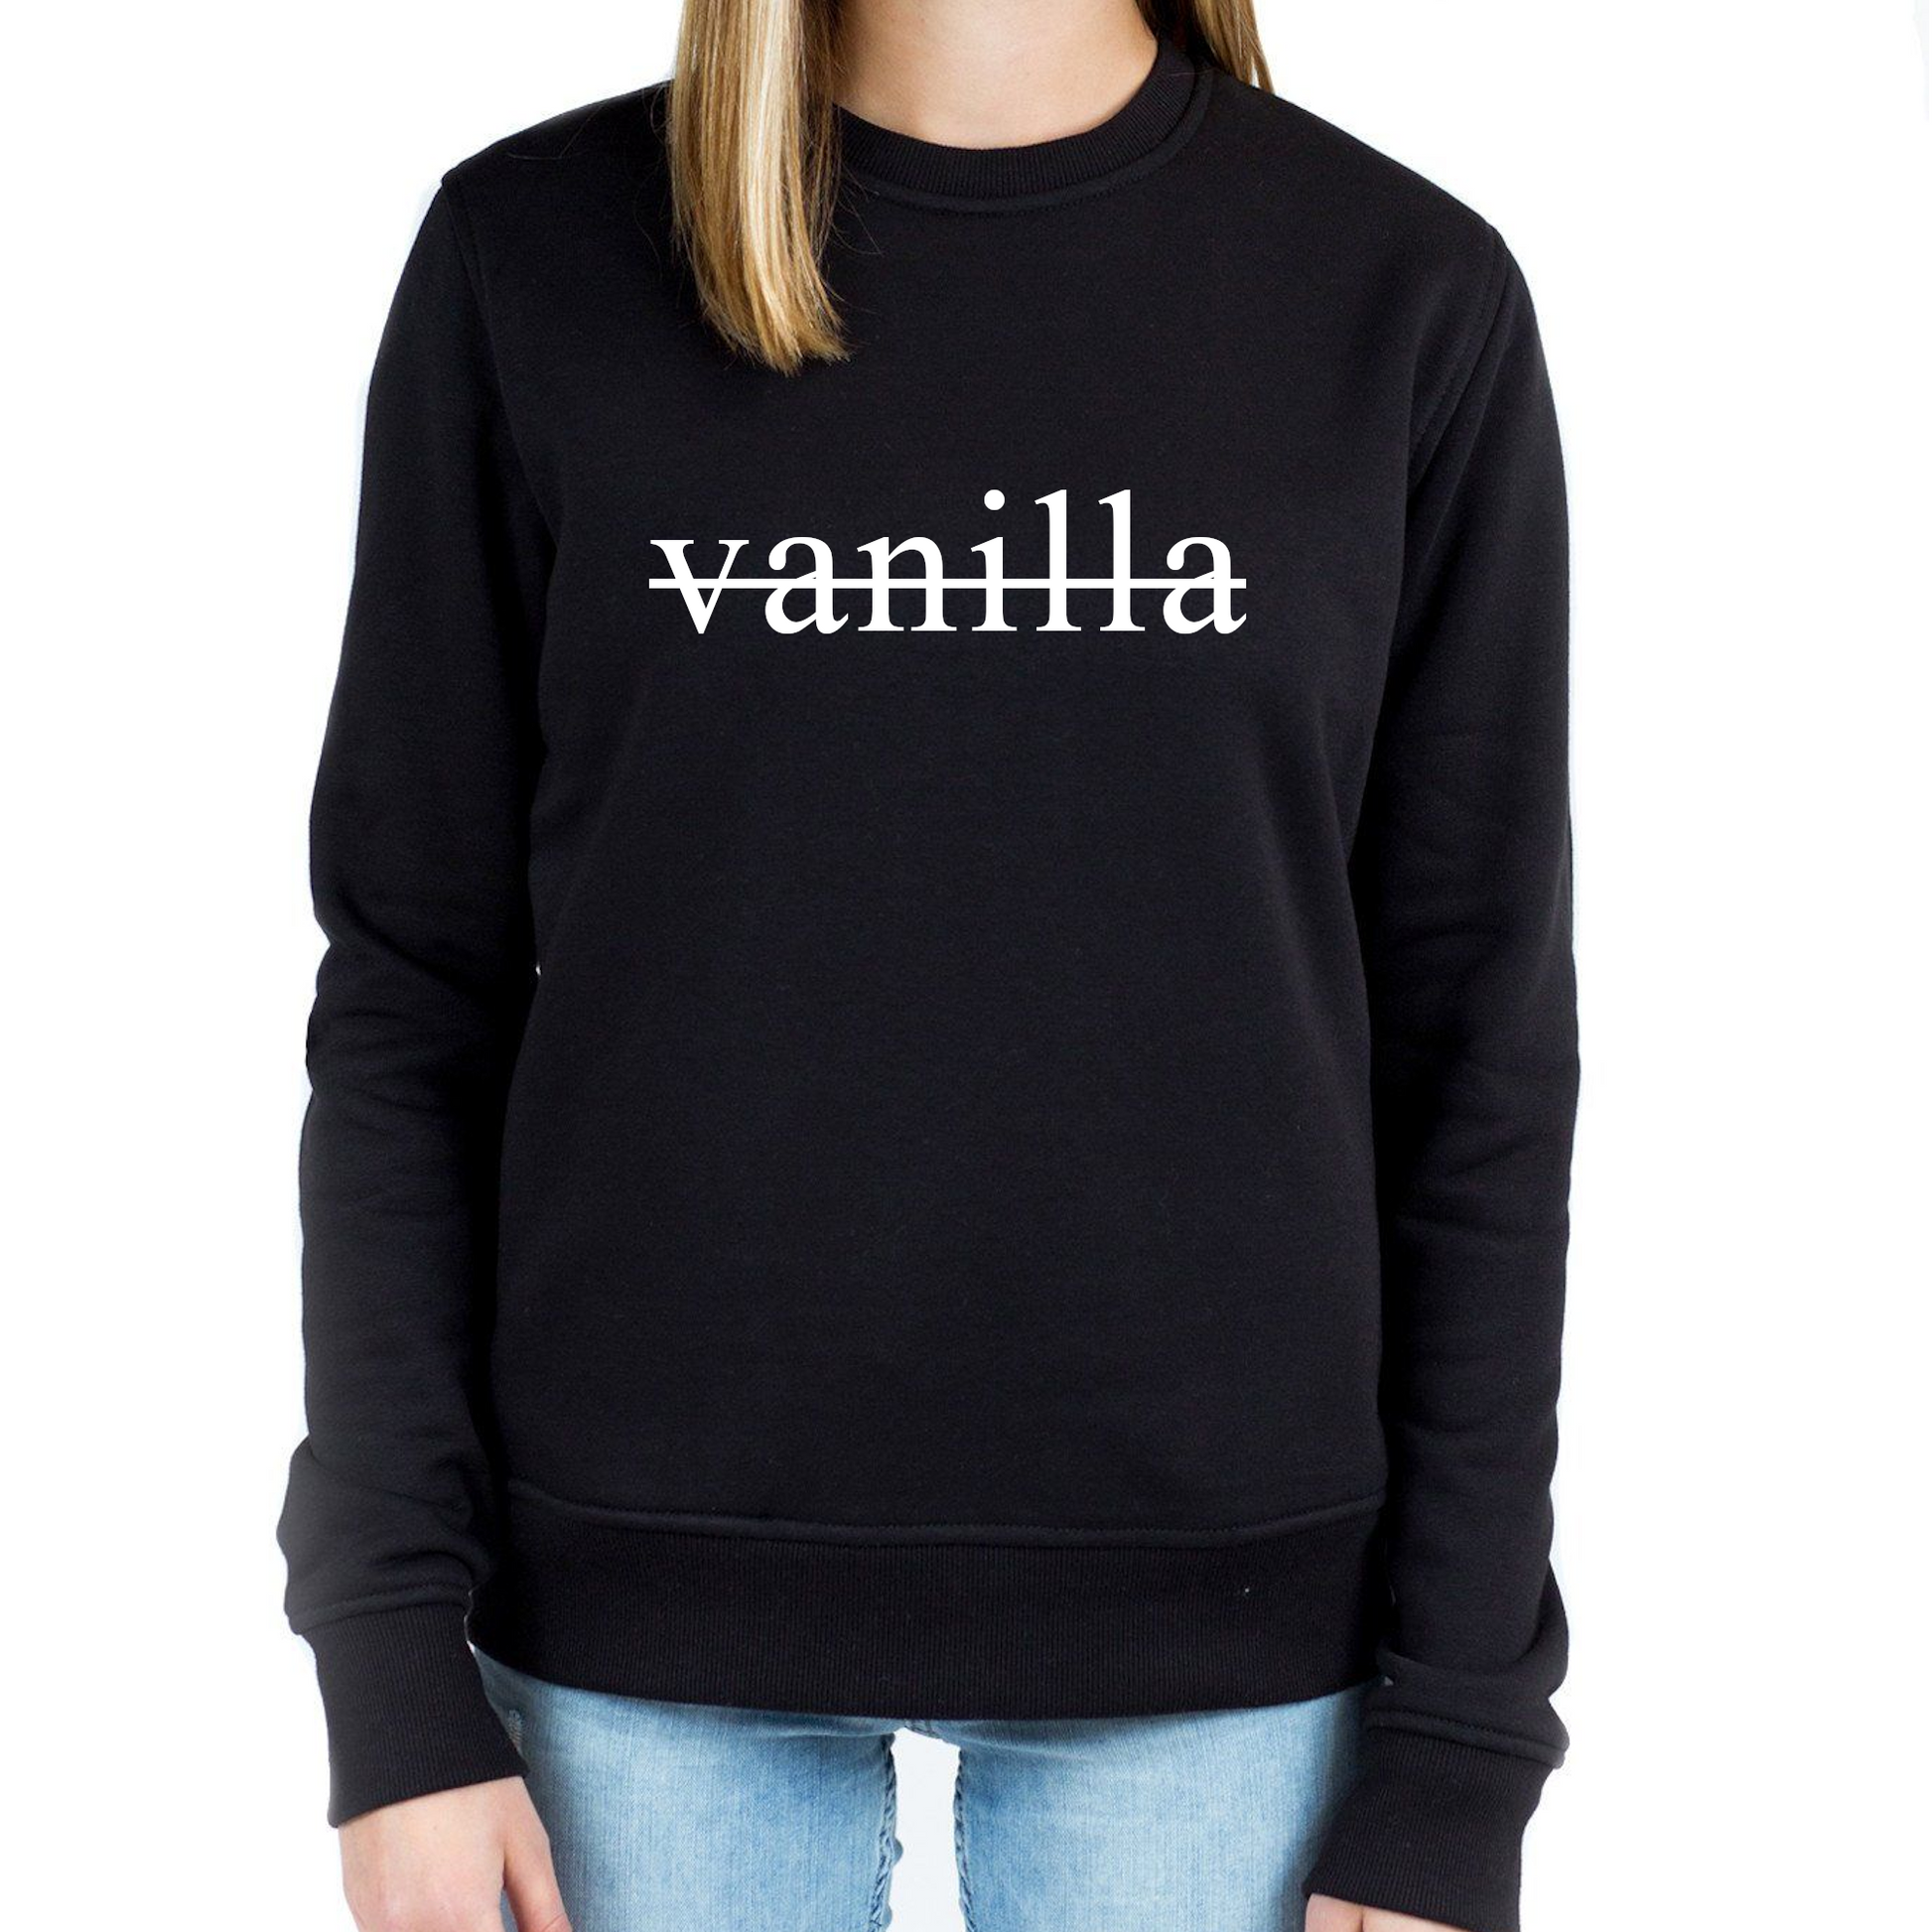 BDSM Sweatshirt - Not Vanilla